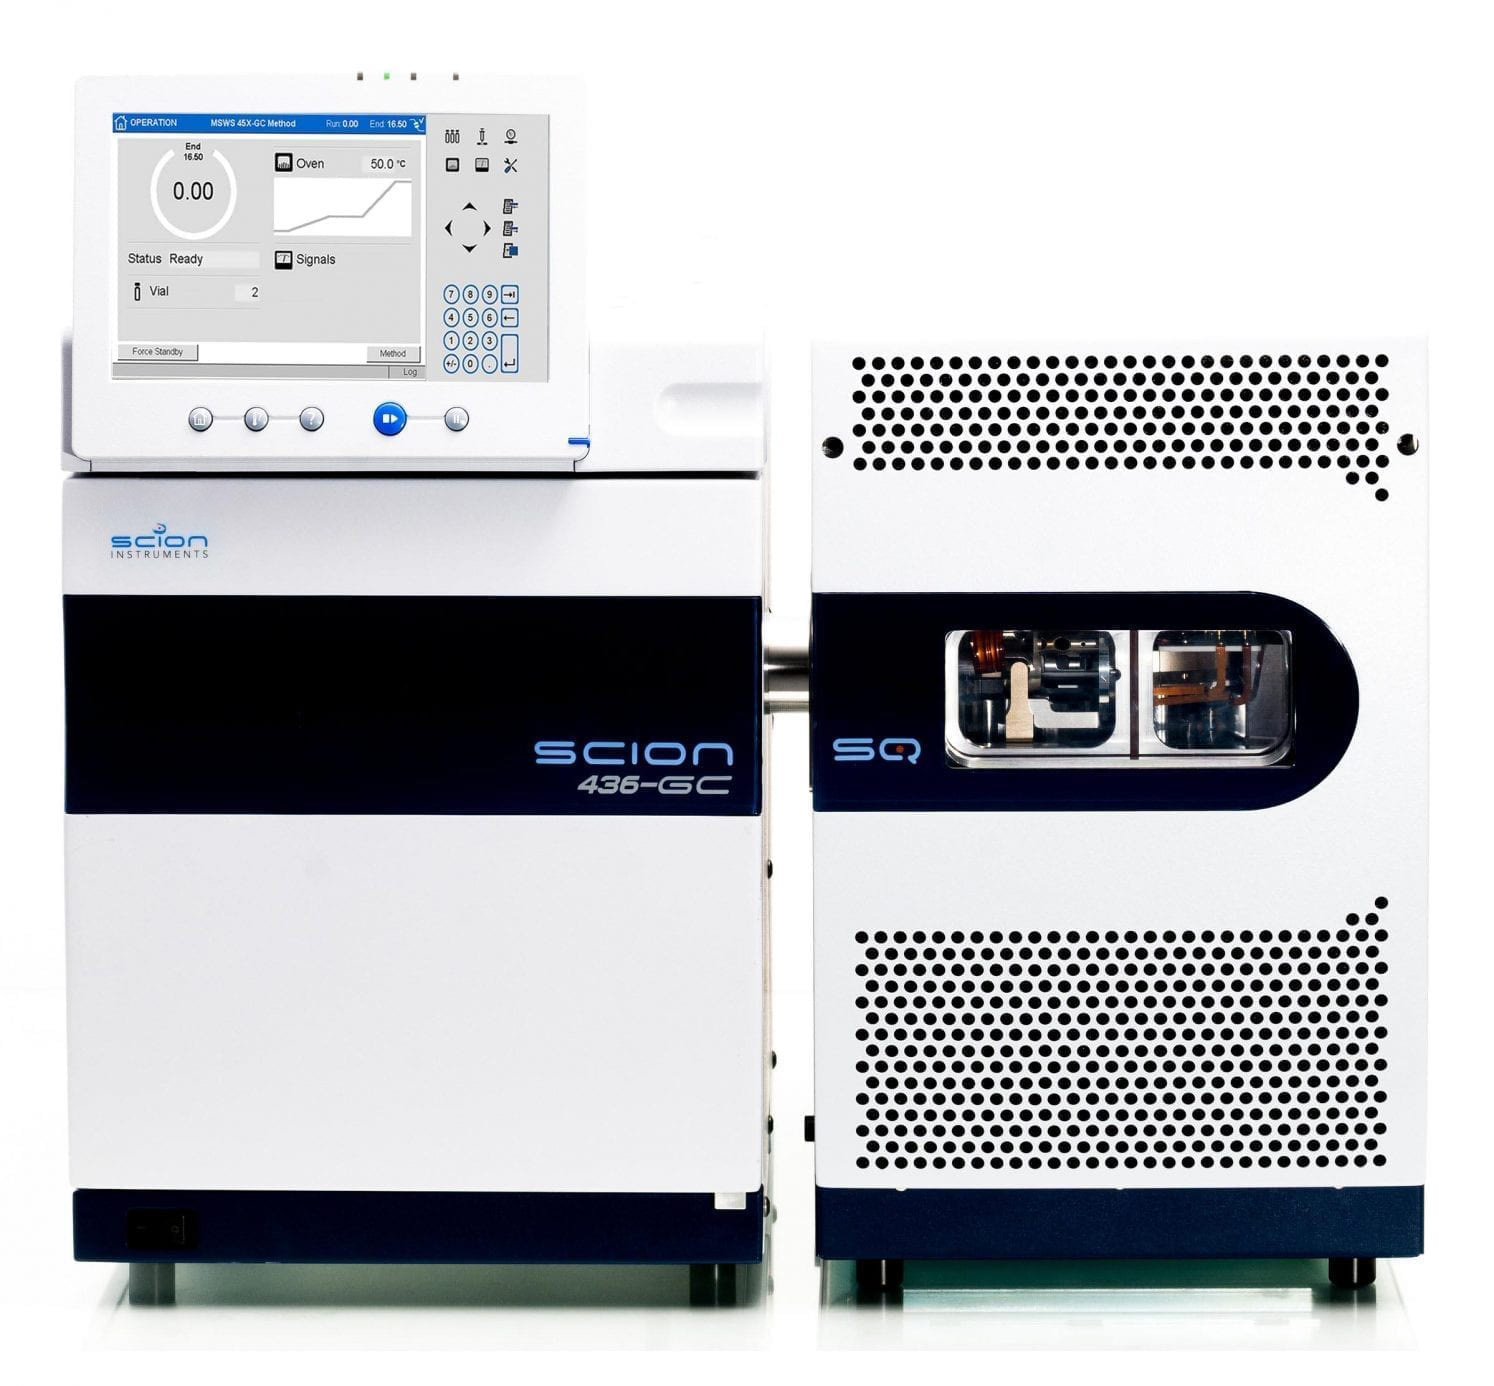 Scion Sq Gc Ms Scion Instruments Gas Chromatography Solutions